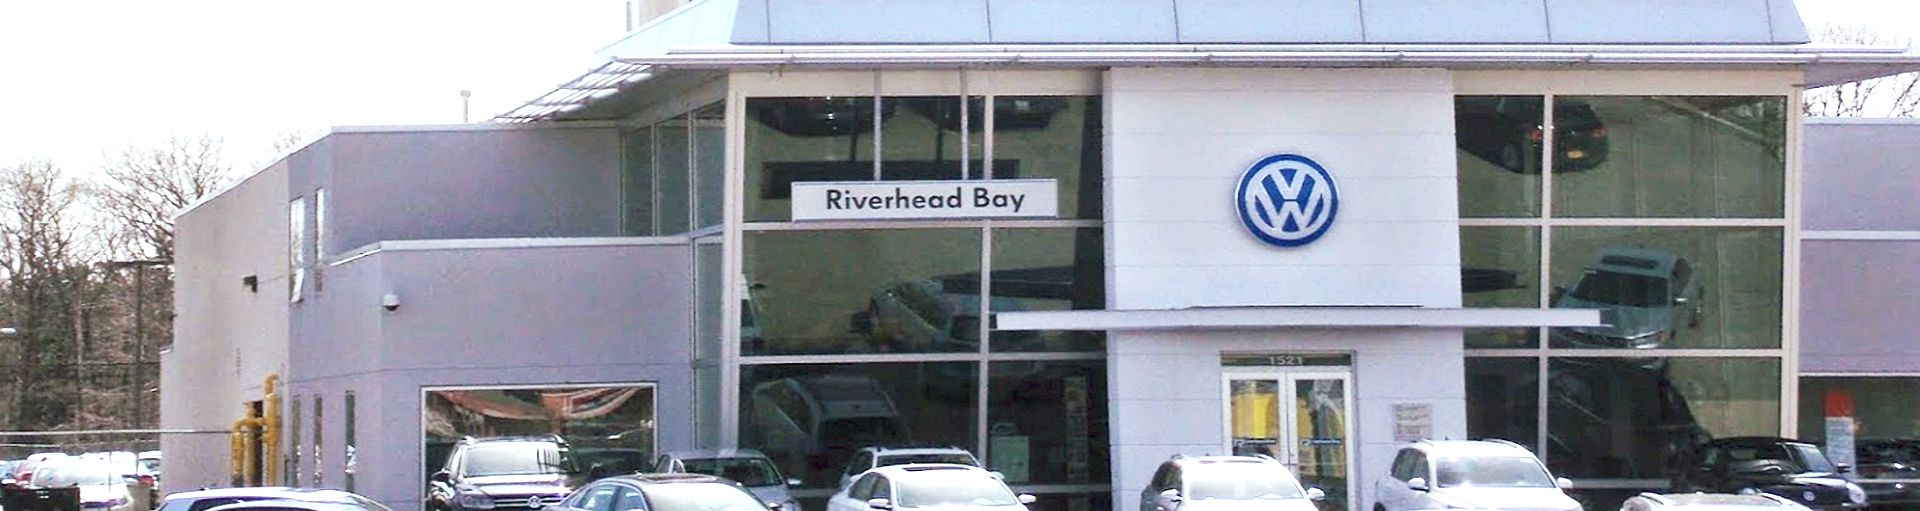 Riverhead Bay Volkswagen Service Center